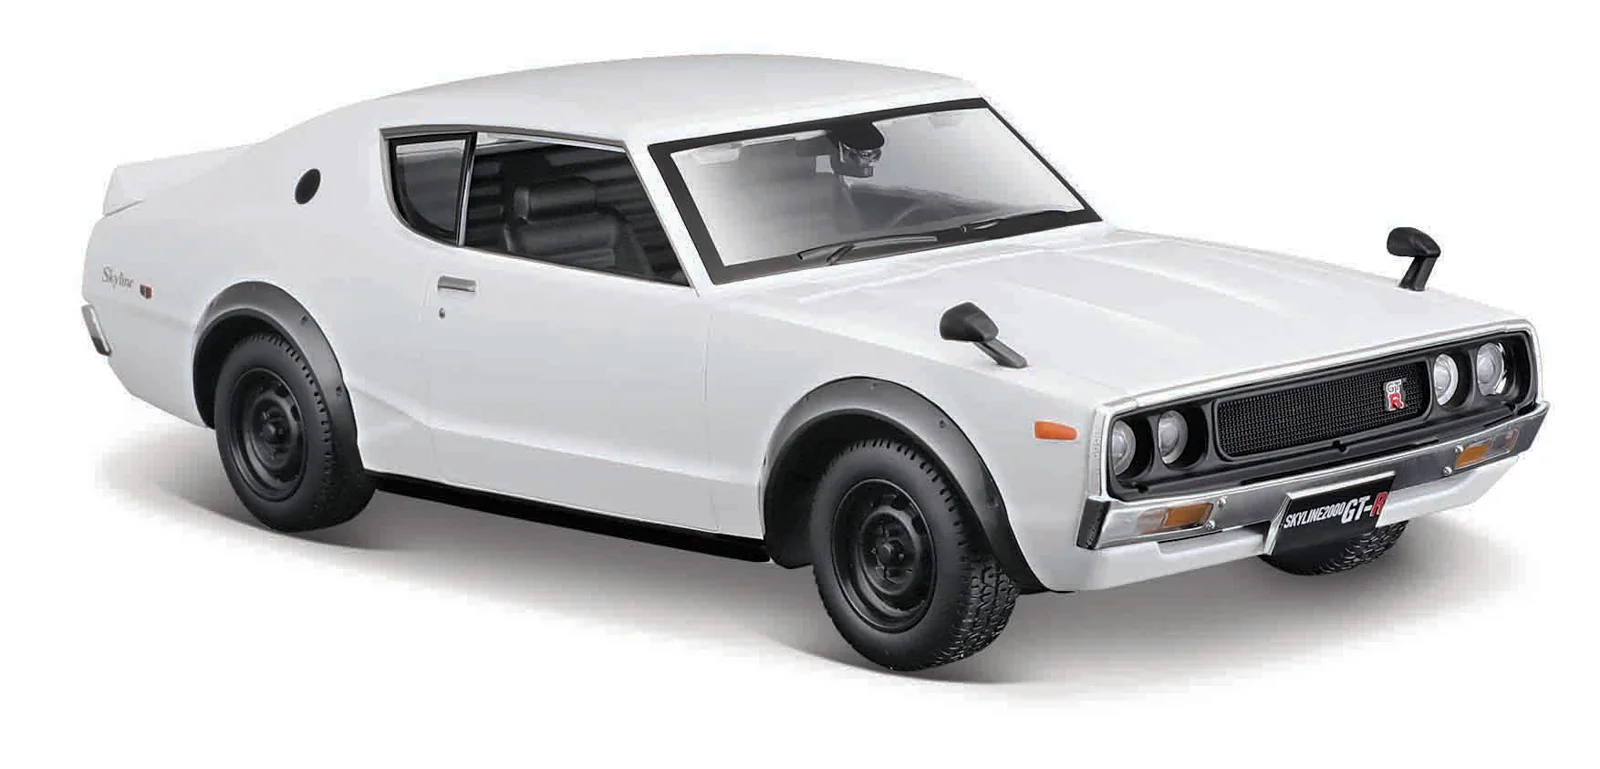 Maisto - 1973 Nissan Skyline 2000GT-R (KPGC110), 1:24